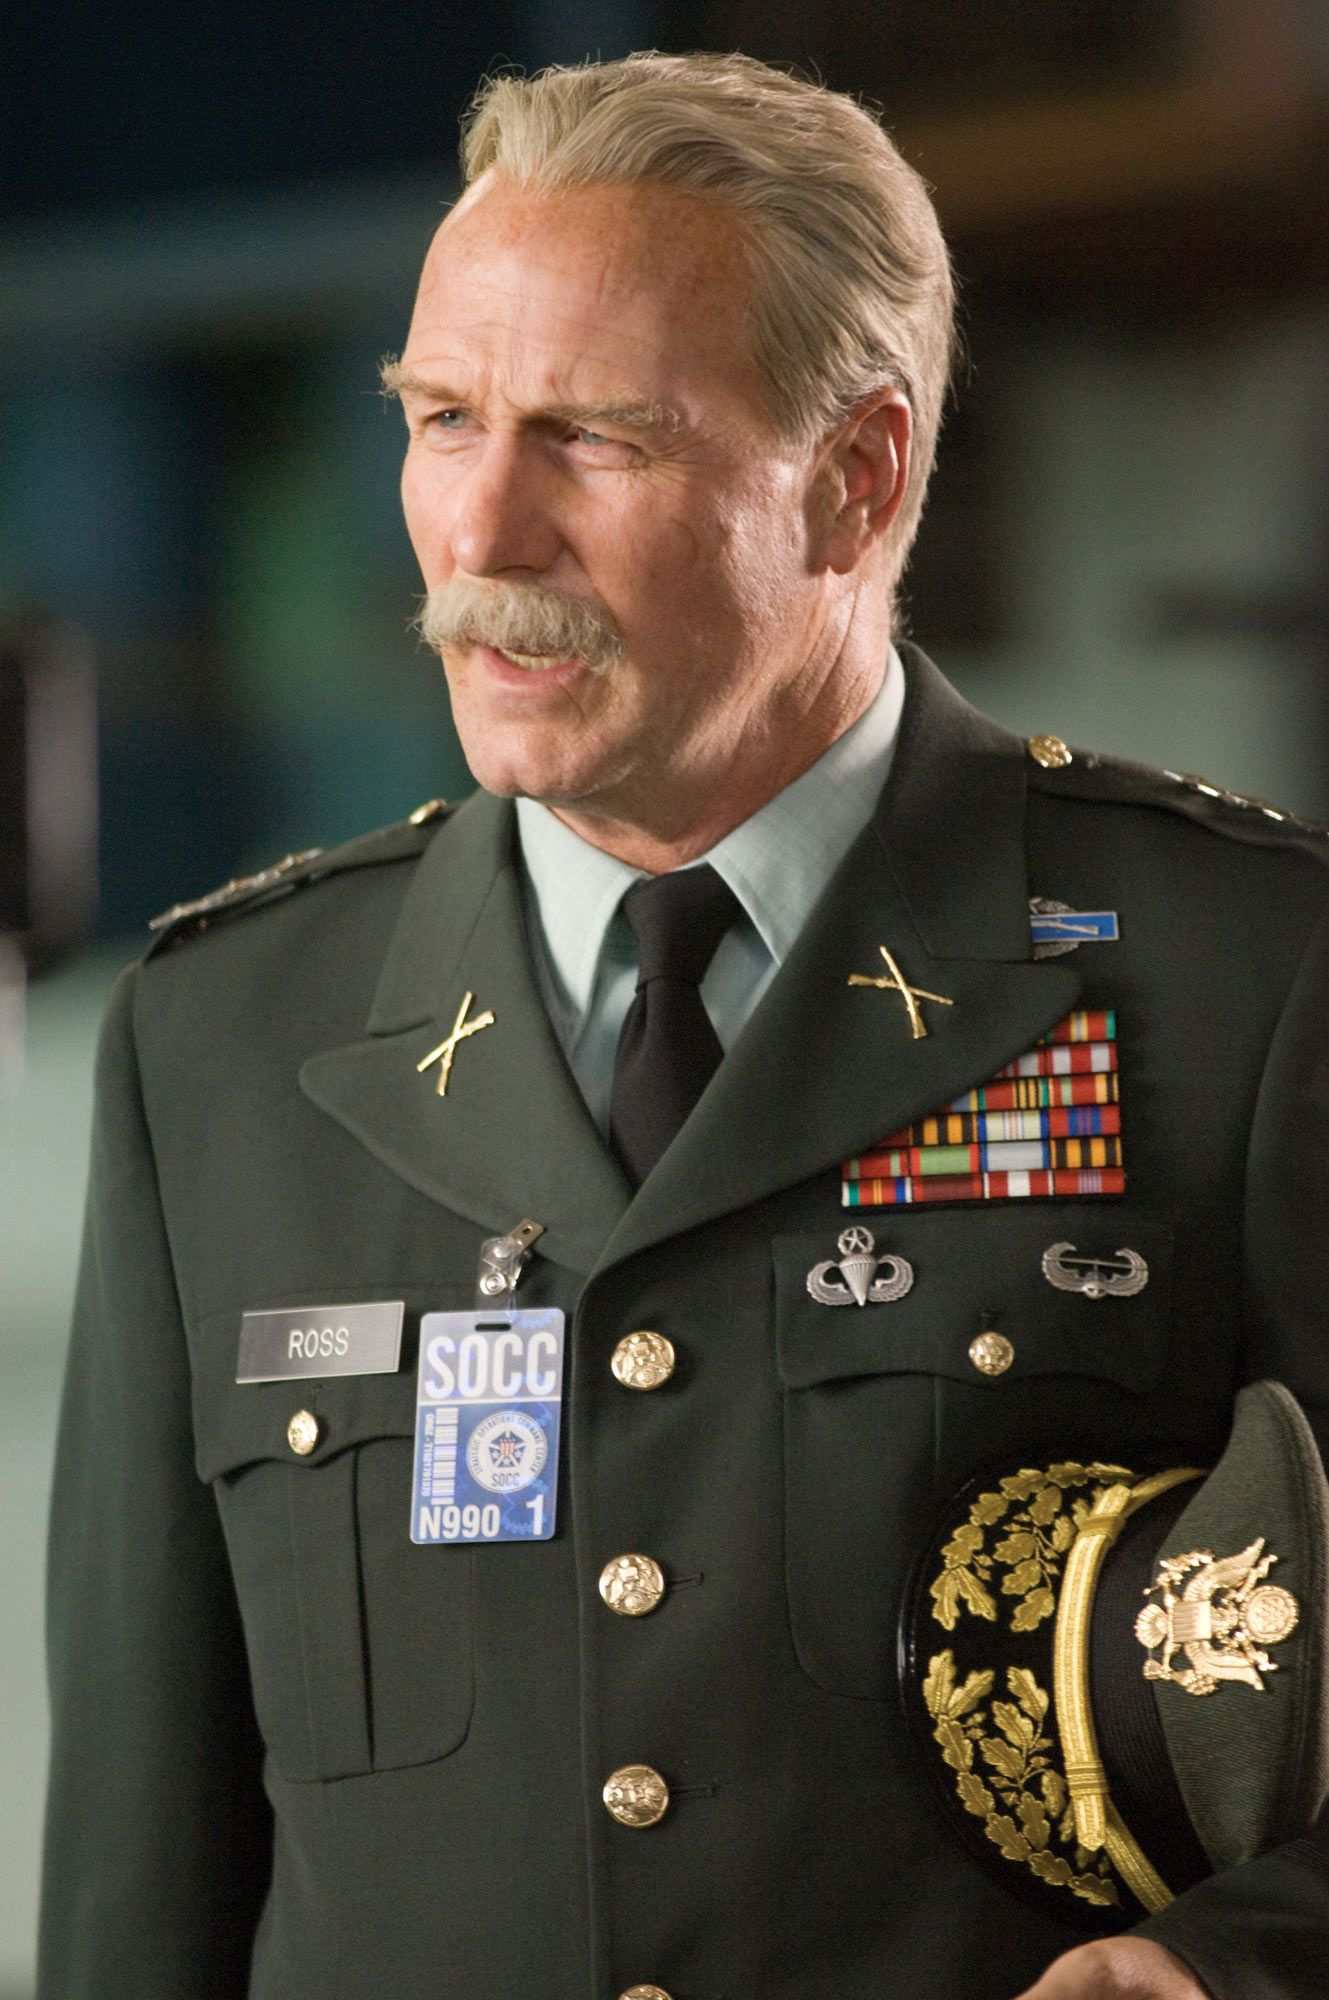 William Hurt is portraying General Thaddeus Thunderbolt Ross